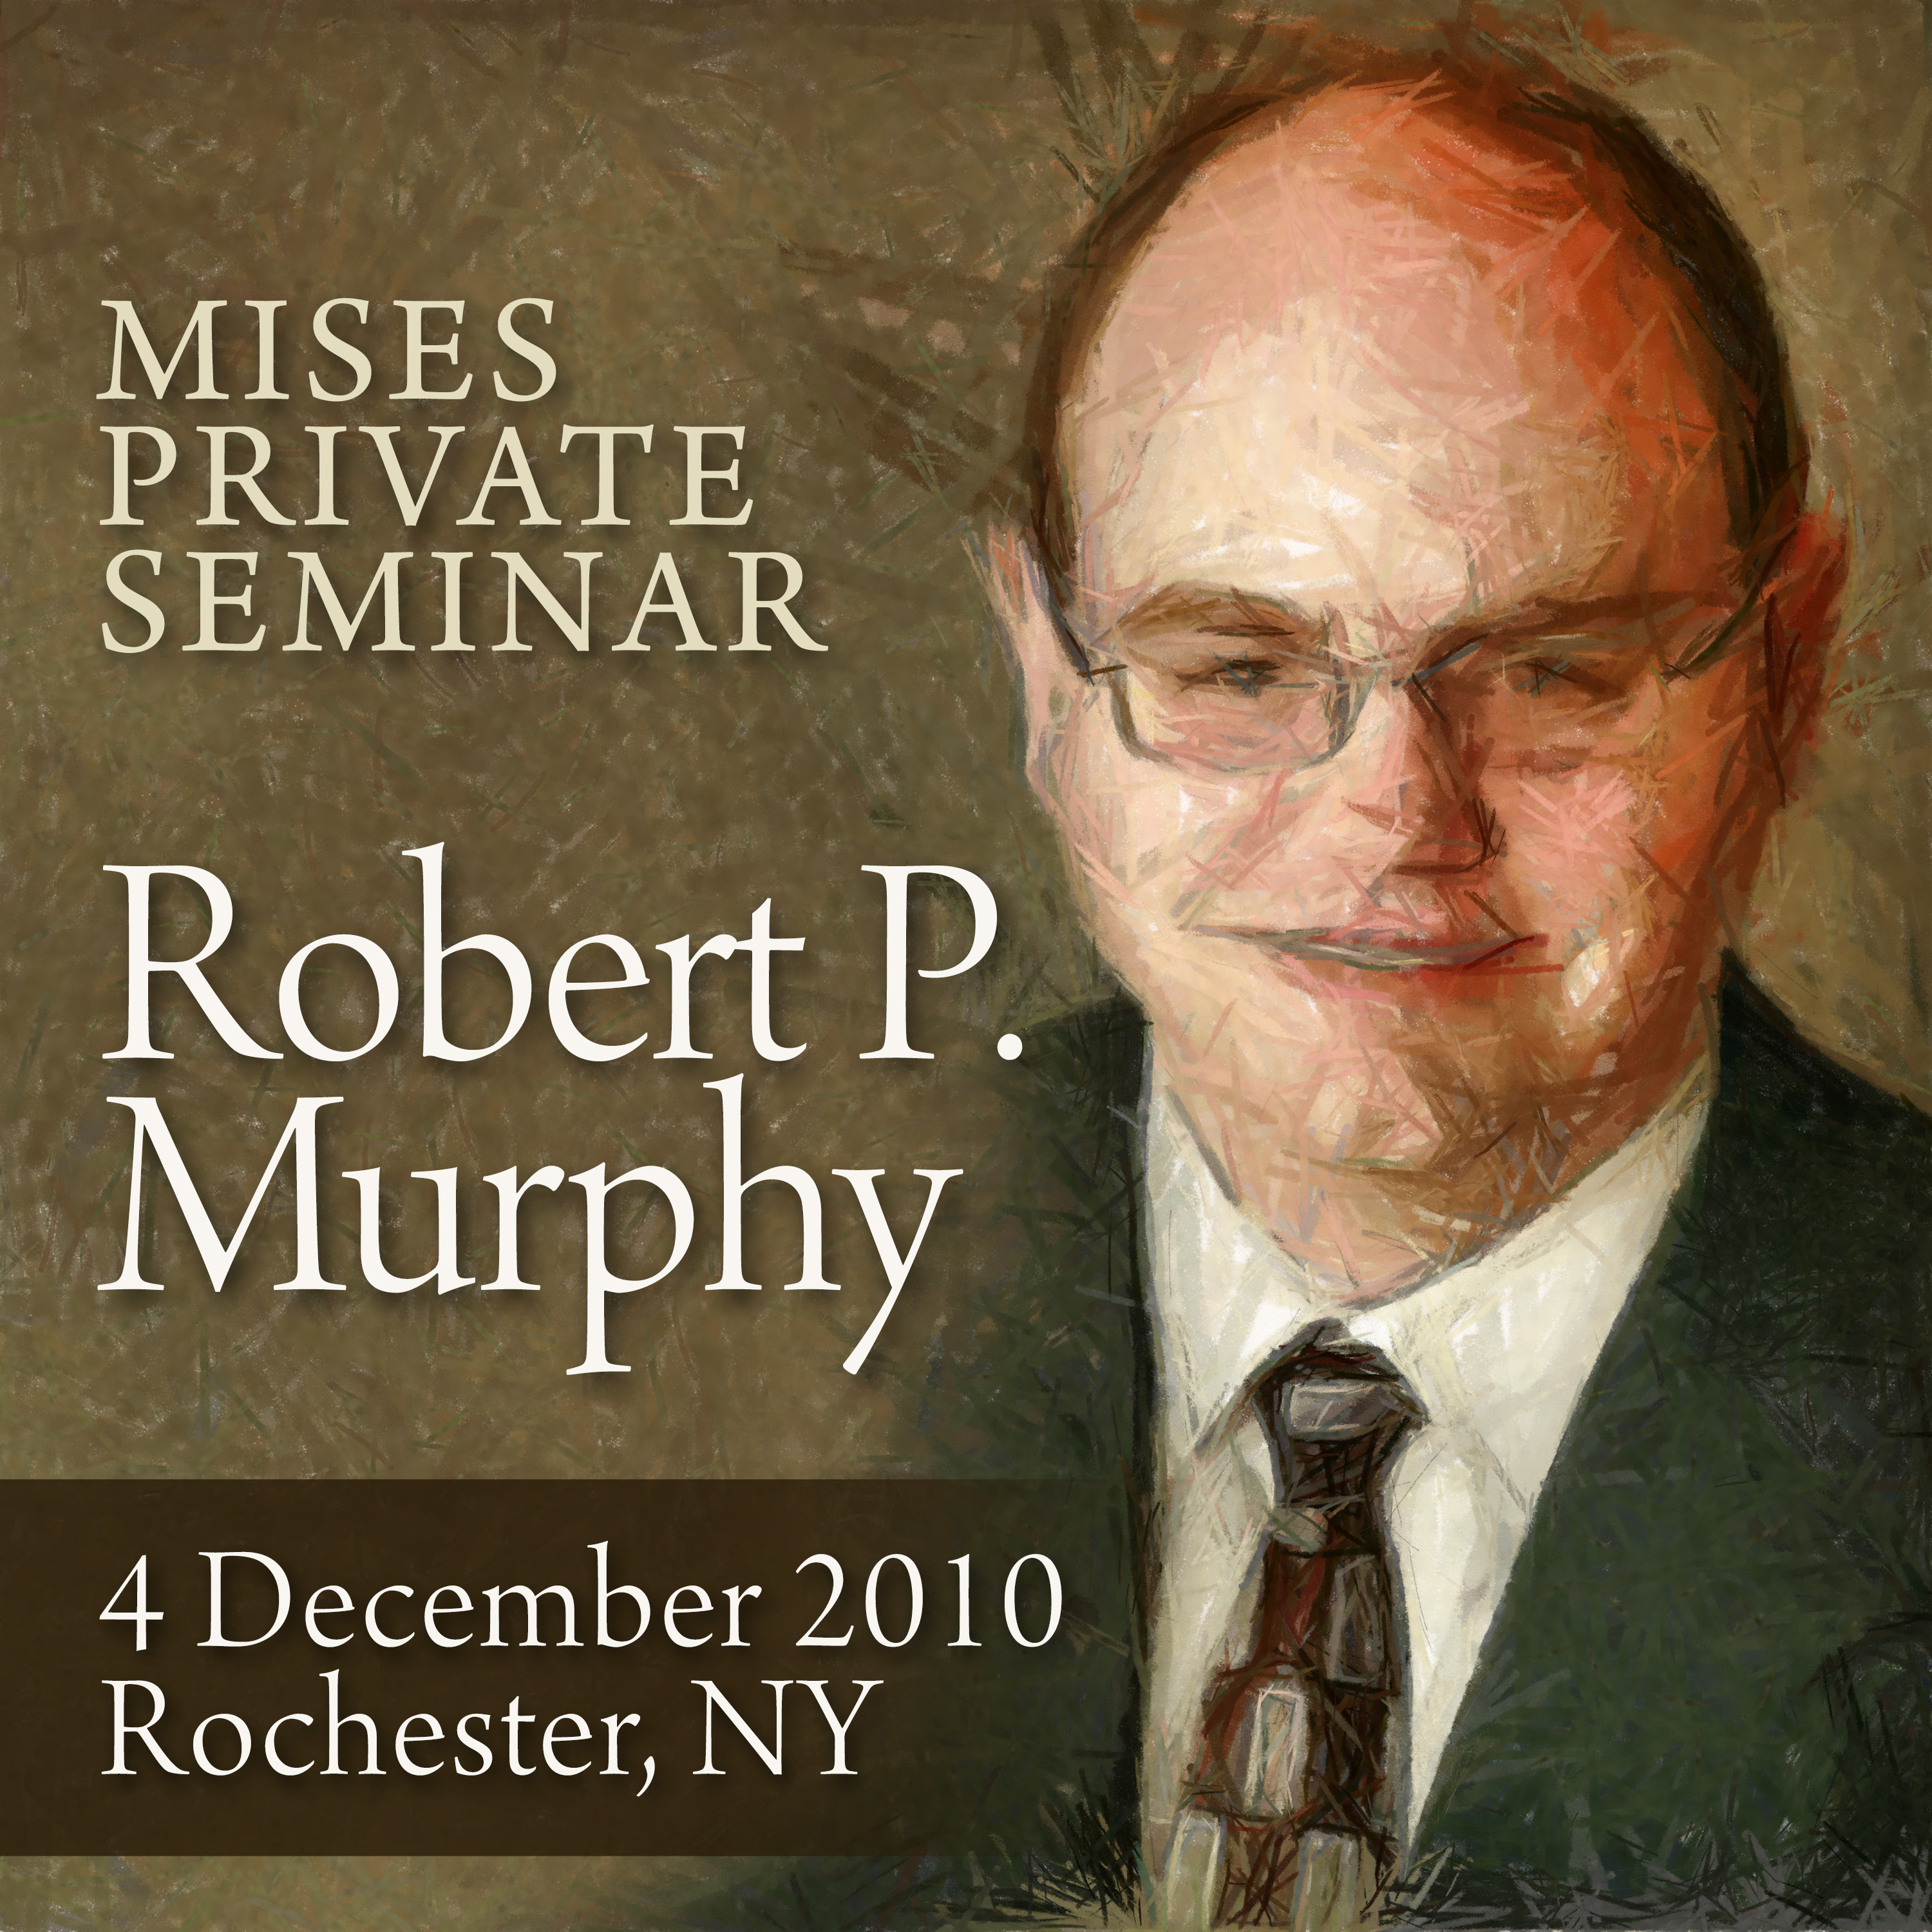 Mises Private Seminar with Robert Murphy